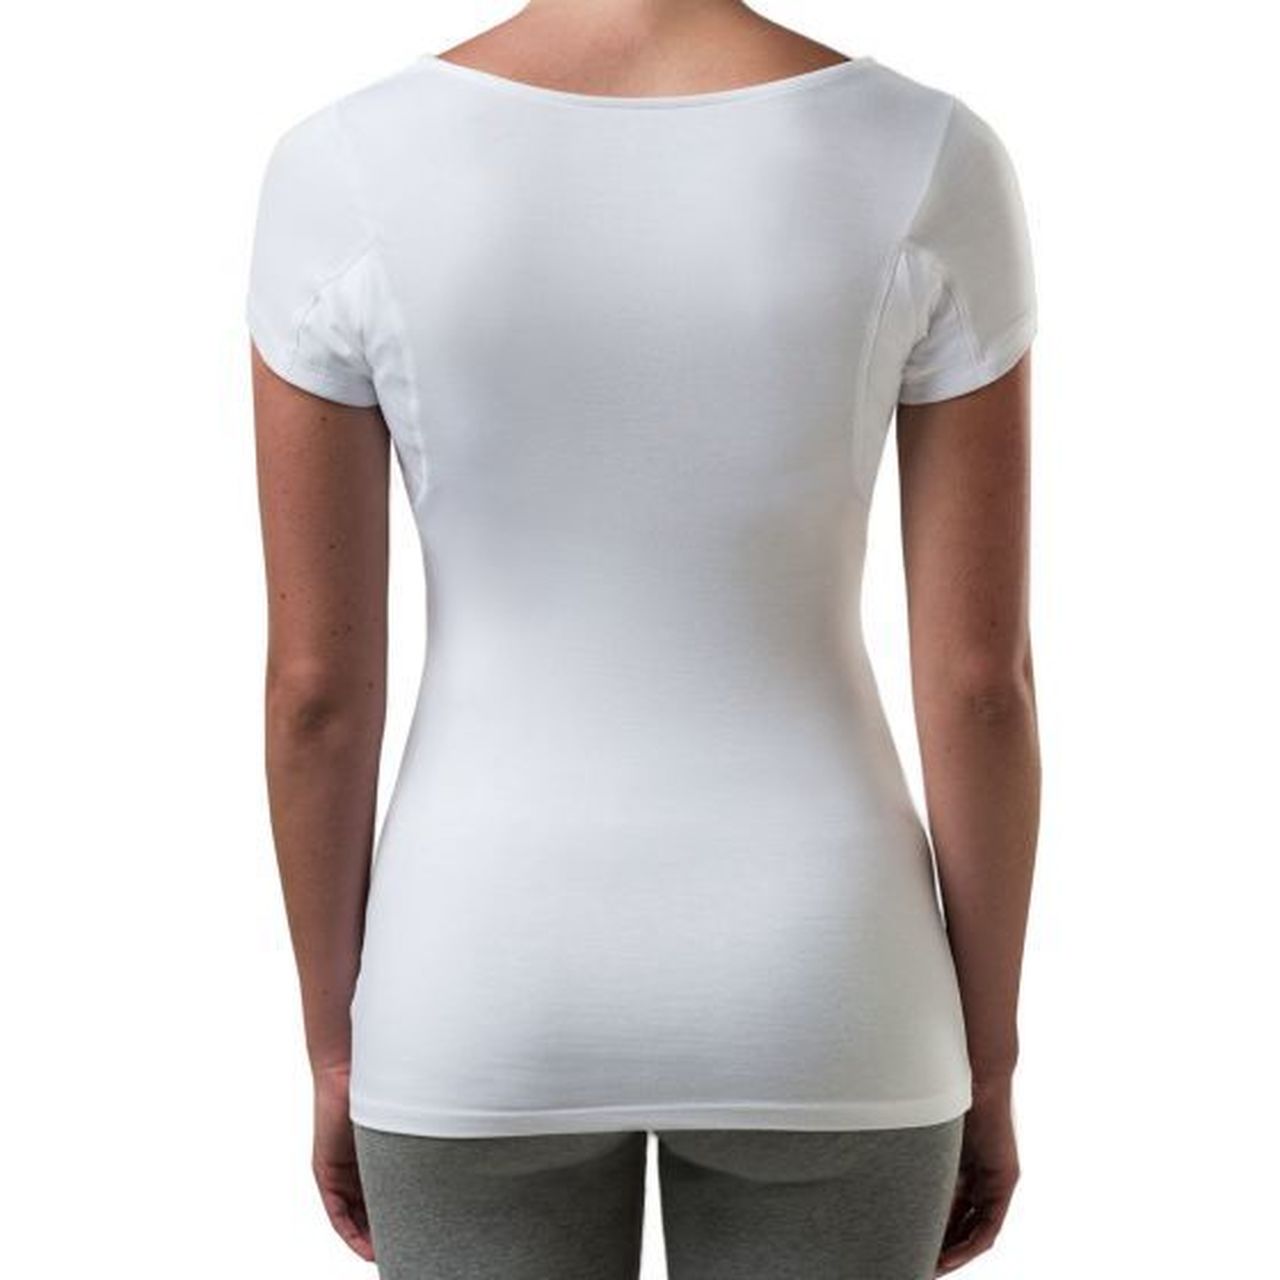 T THOMPSON TEE Women's Sweatproof Undershirt – Slim Fit Deep V